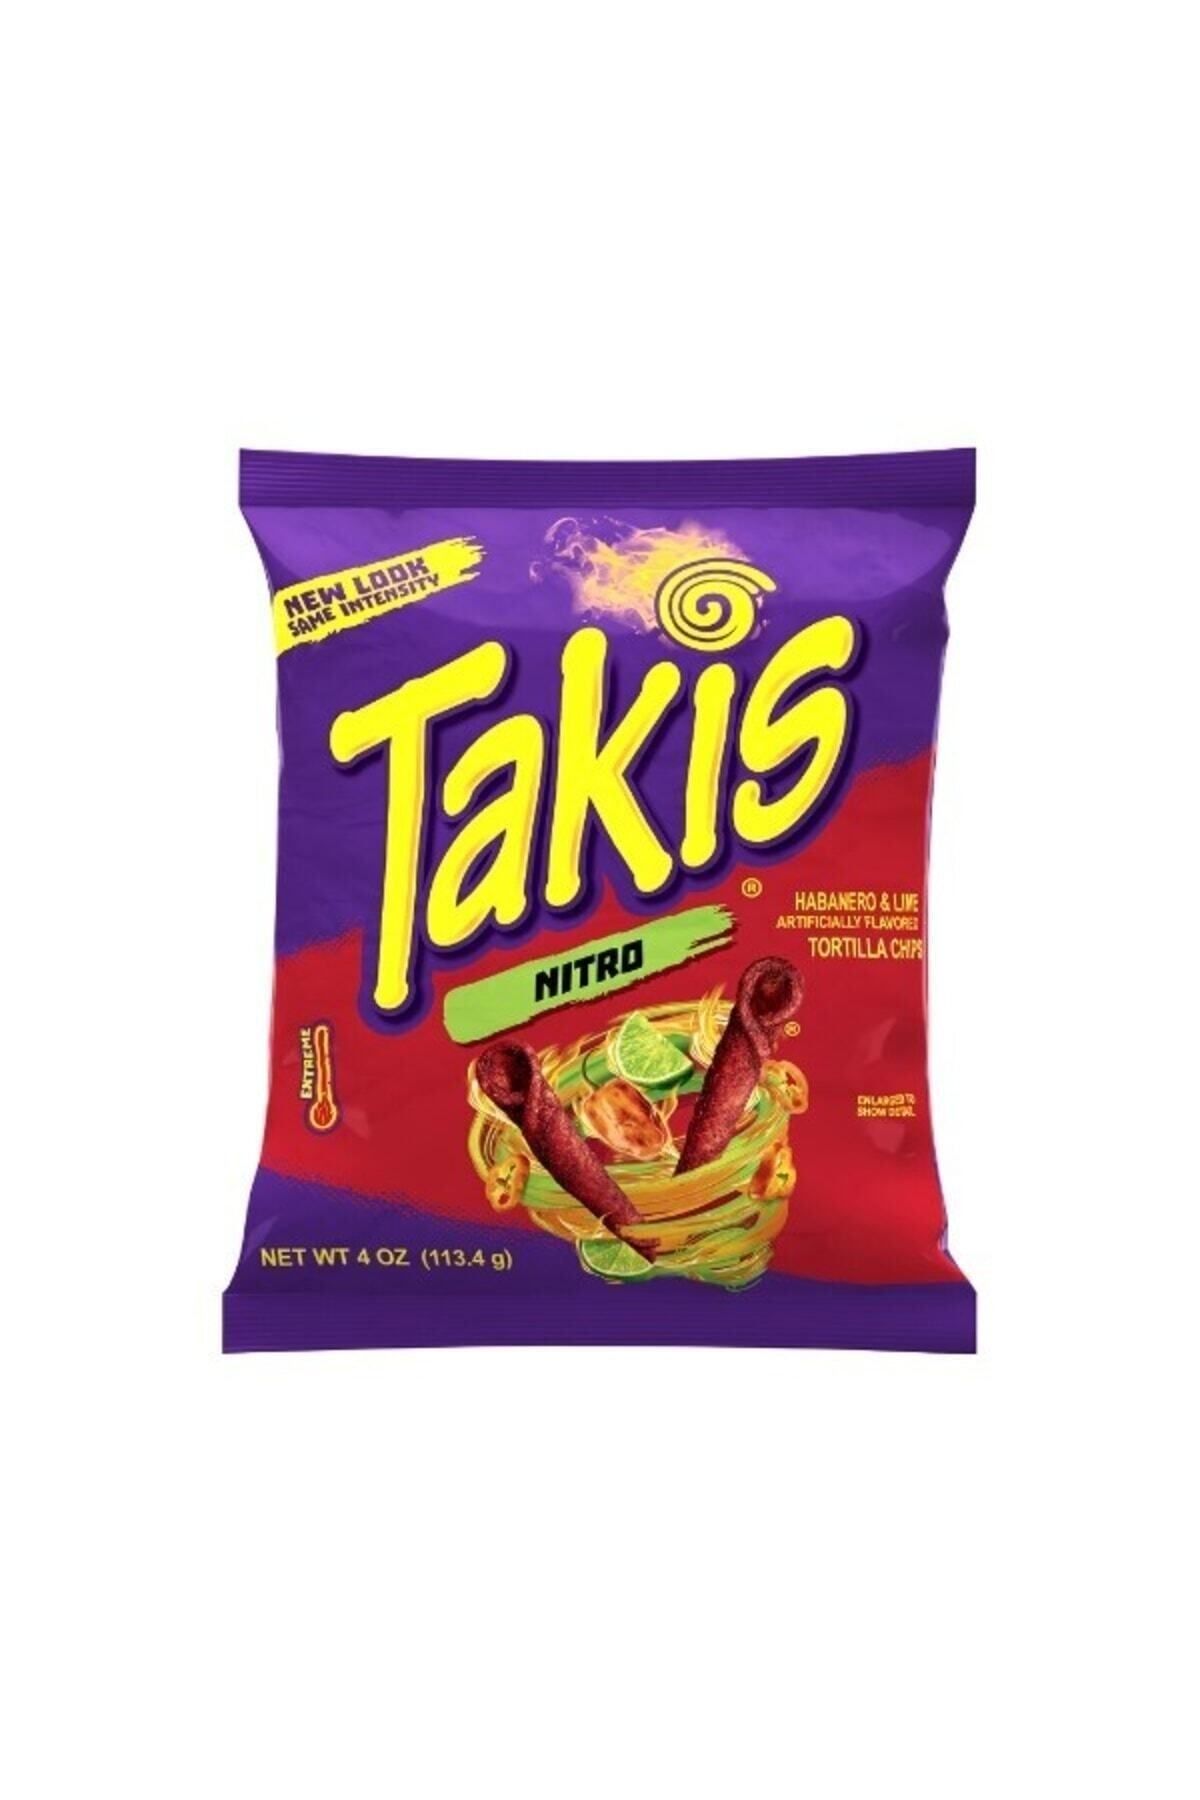 Takis Nitro Habanero & Lime Tortilla Chips 113.4g